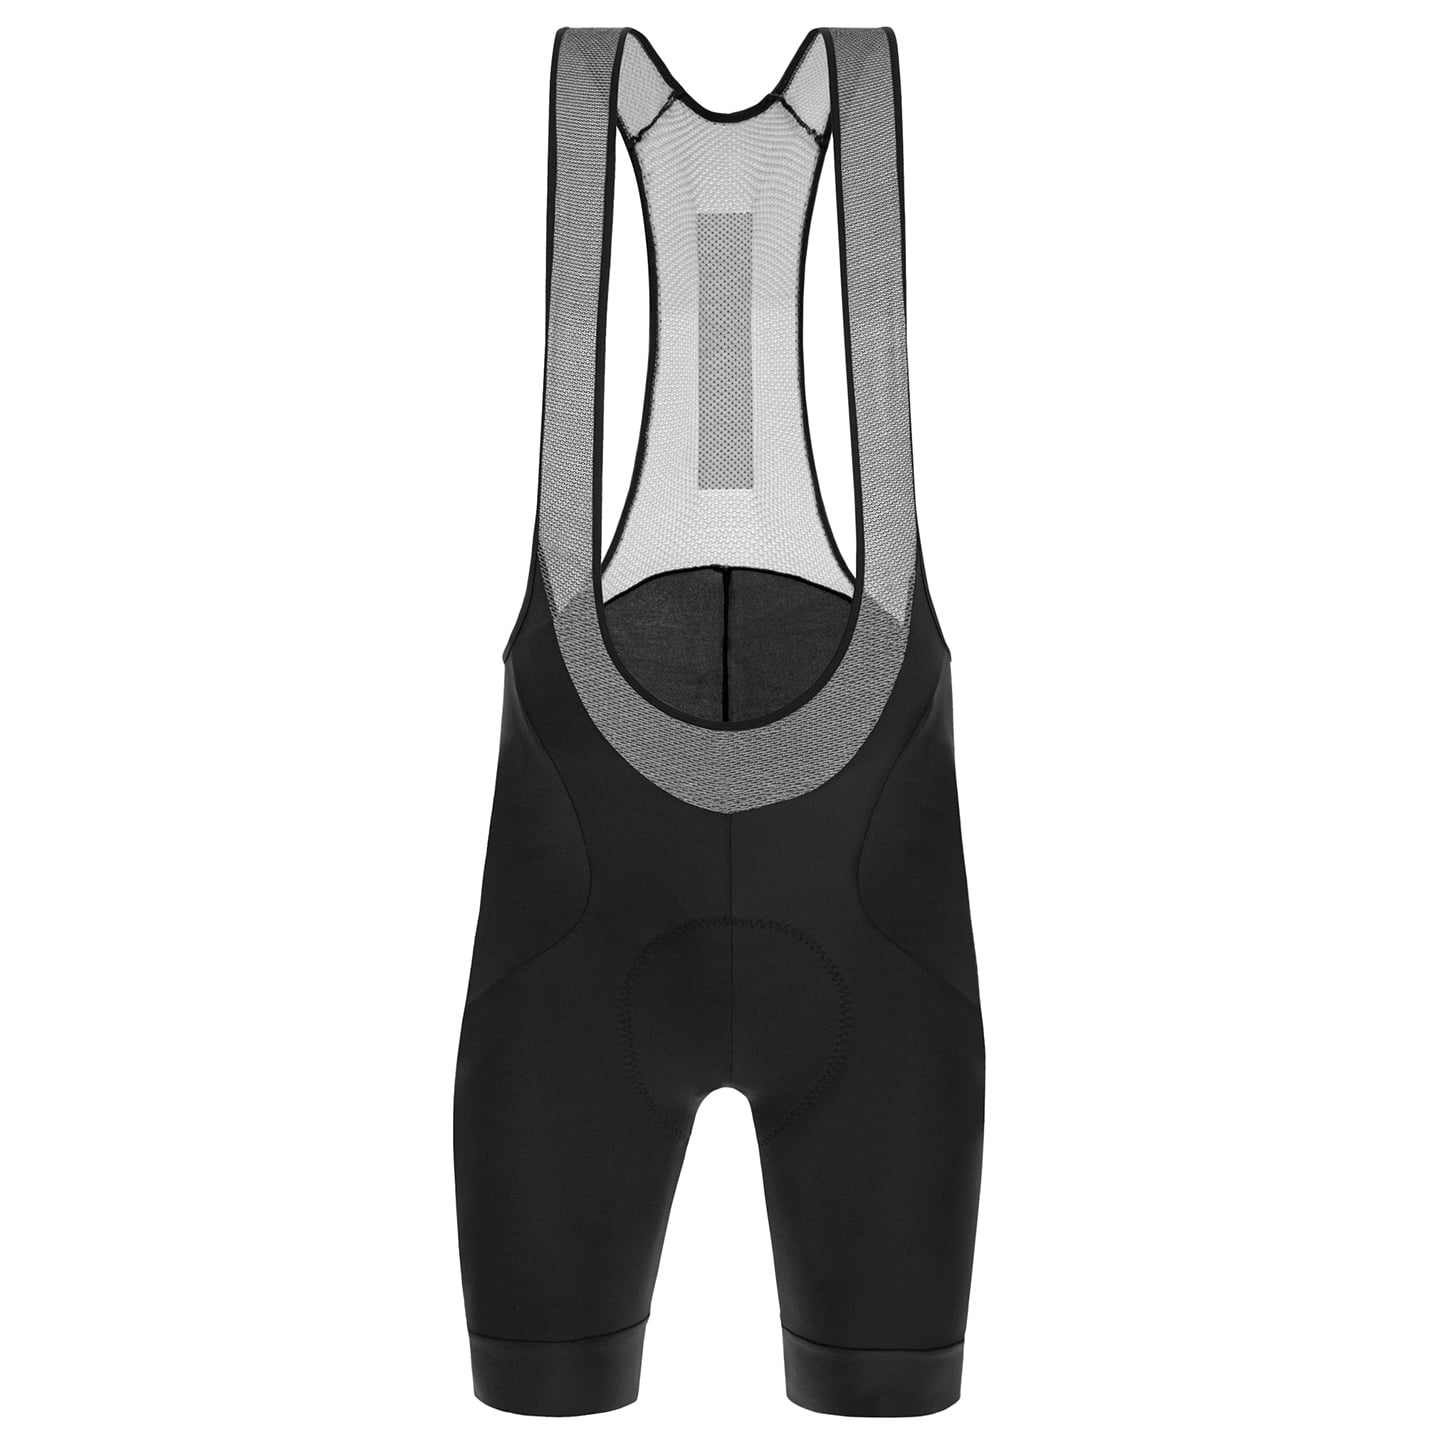 SANTINI Karma Delta Bib Shorts Bib Shorts, for men, size L, Cycle shorts, Cycling clothing